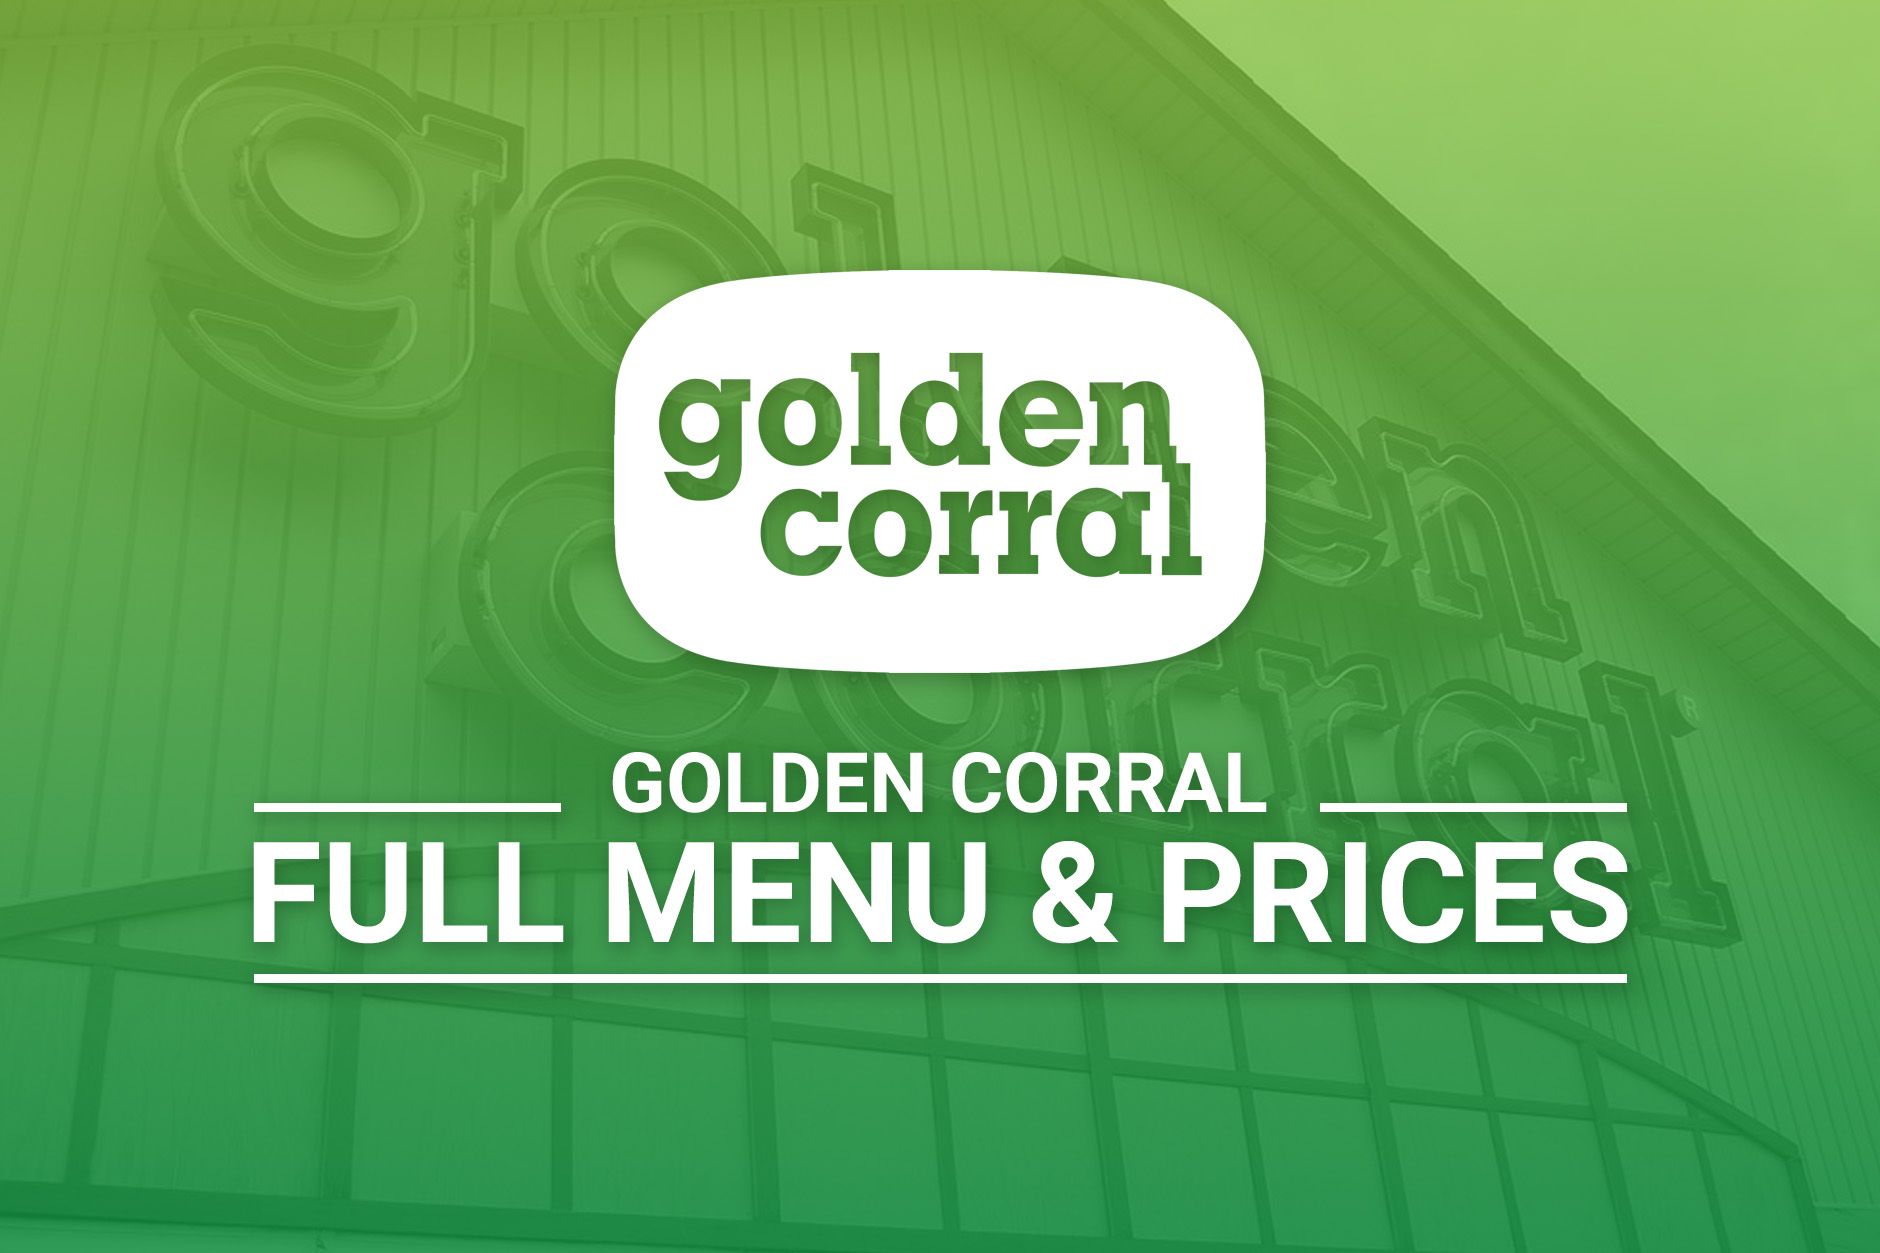 Golden Corral Full Menu